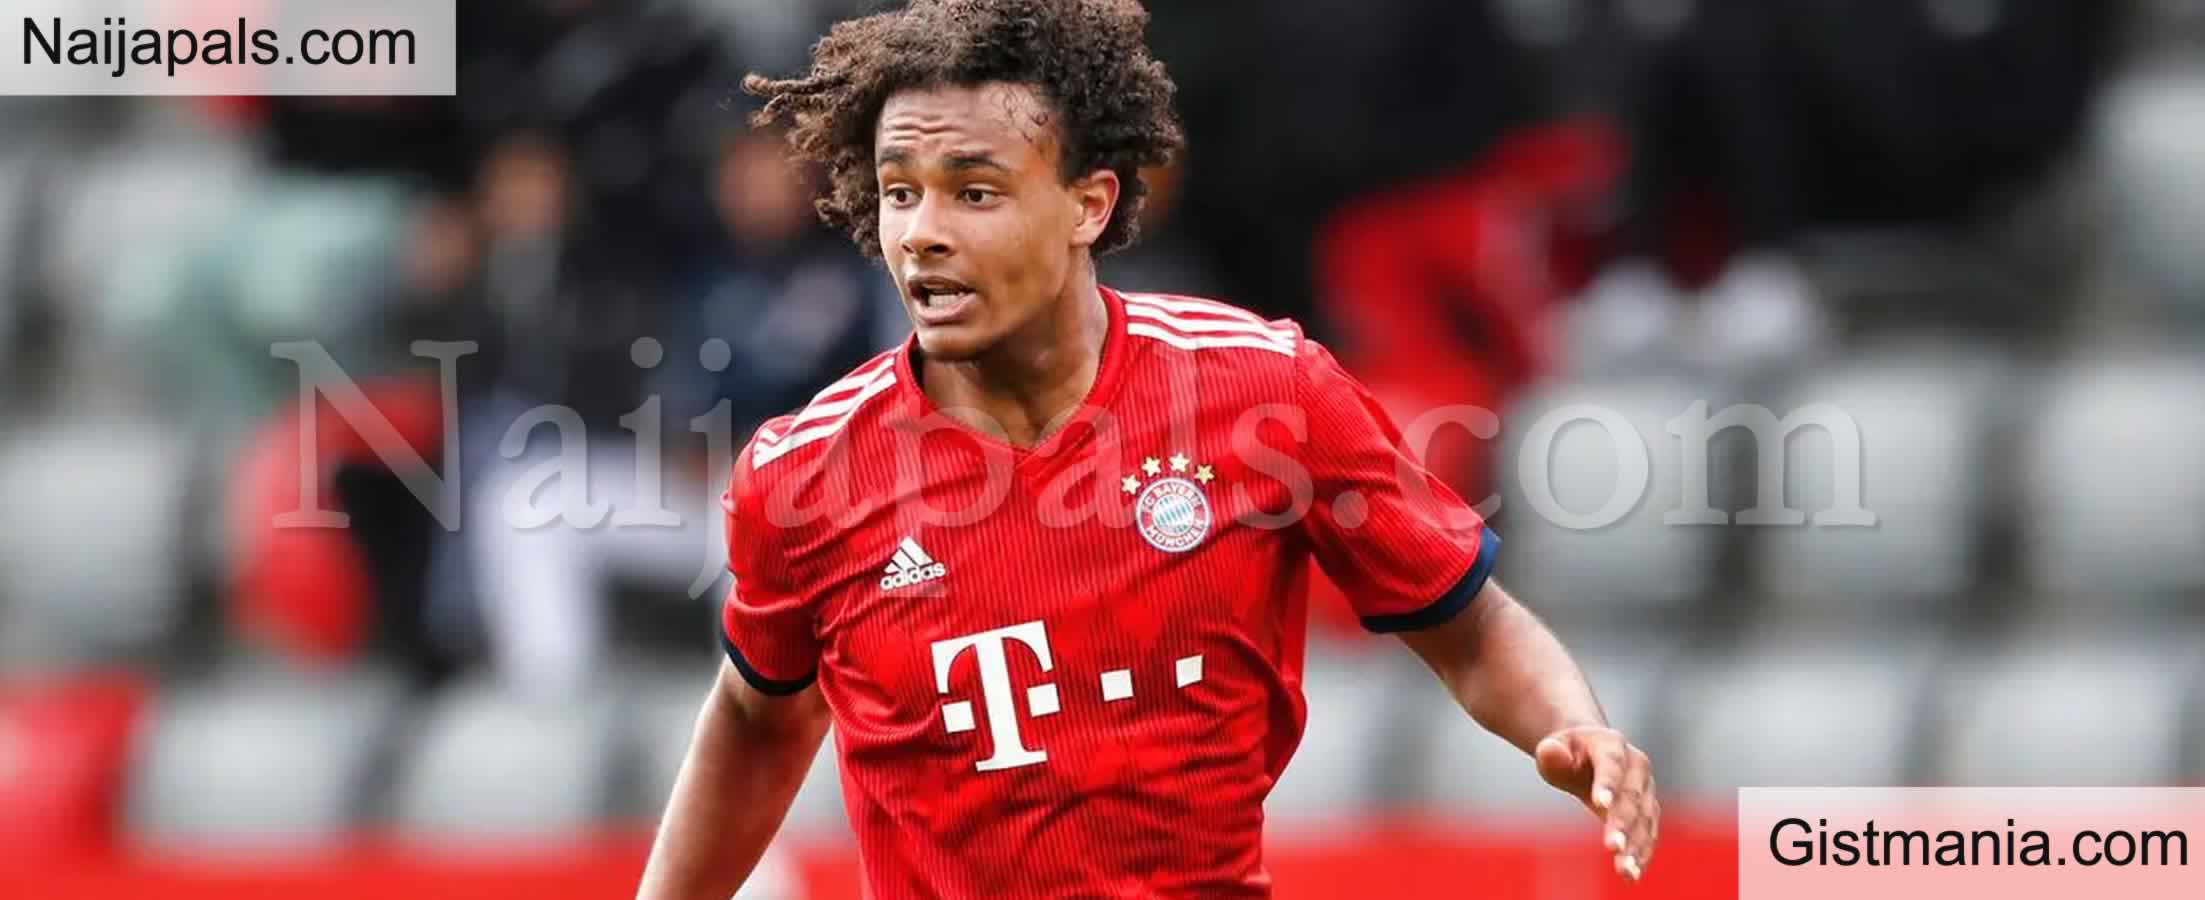 SPORT: Bayern Munich Star, Born Nigerian, Joshua Zirkzee Snubs Nigeria